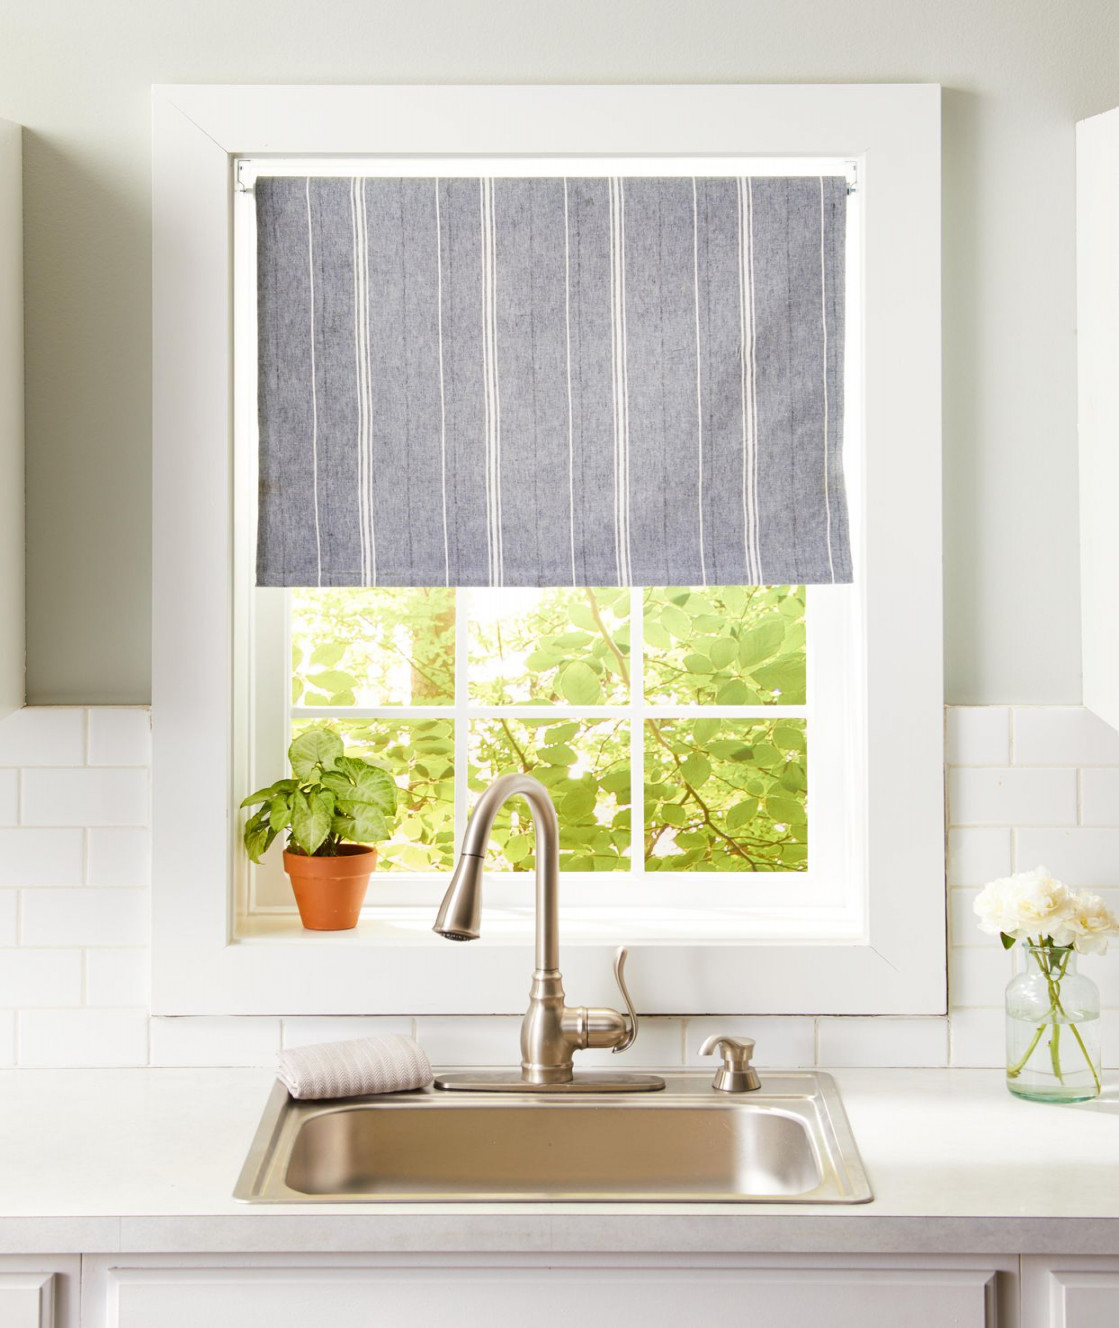 DIY Kitchen Window Treatments That Block Sun and Add Style